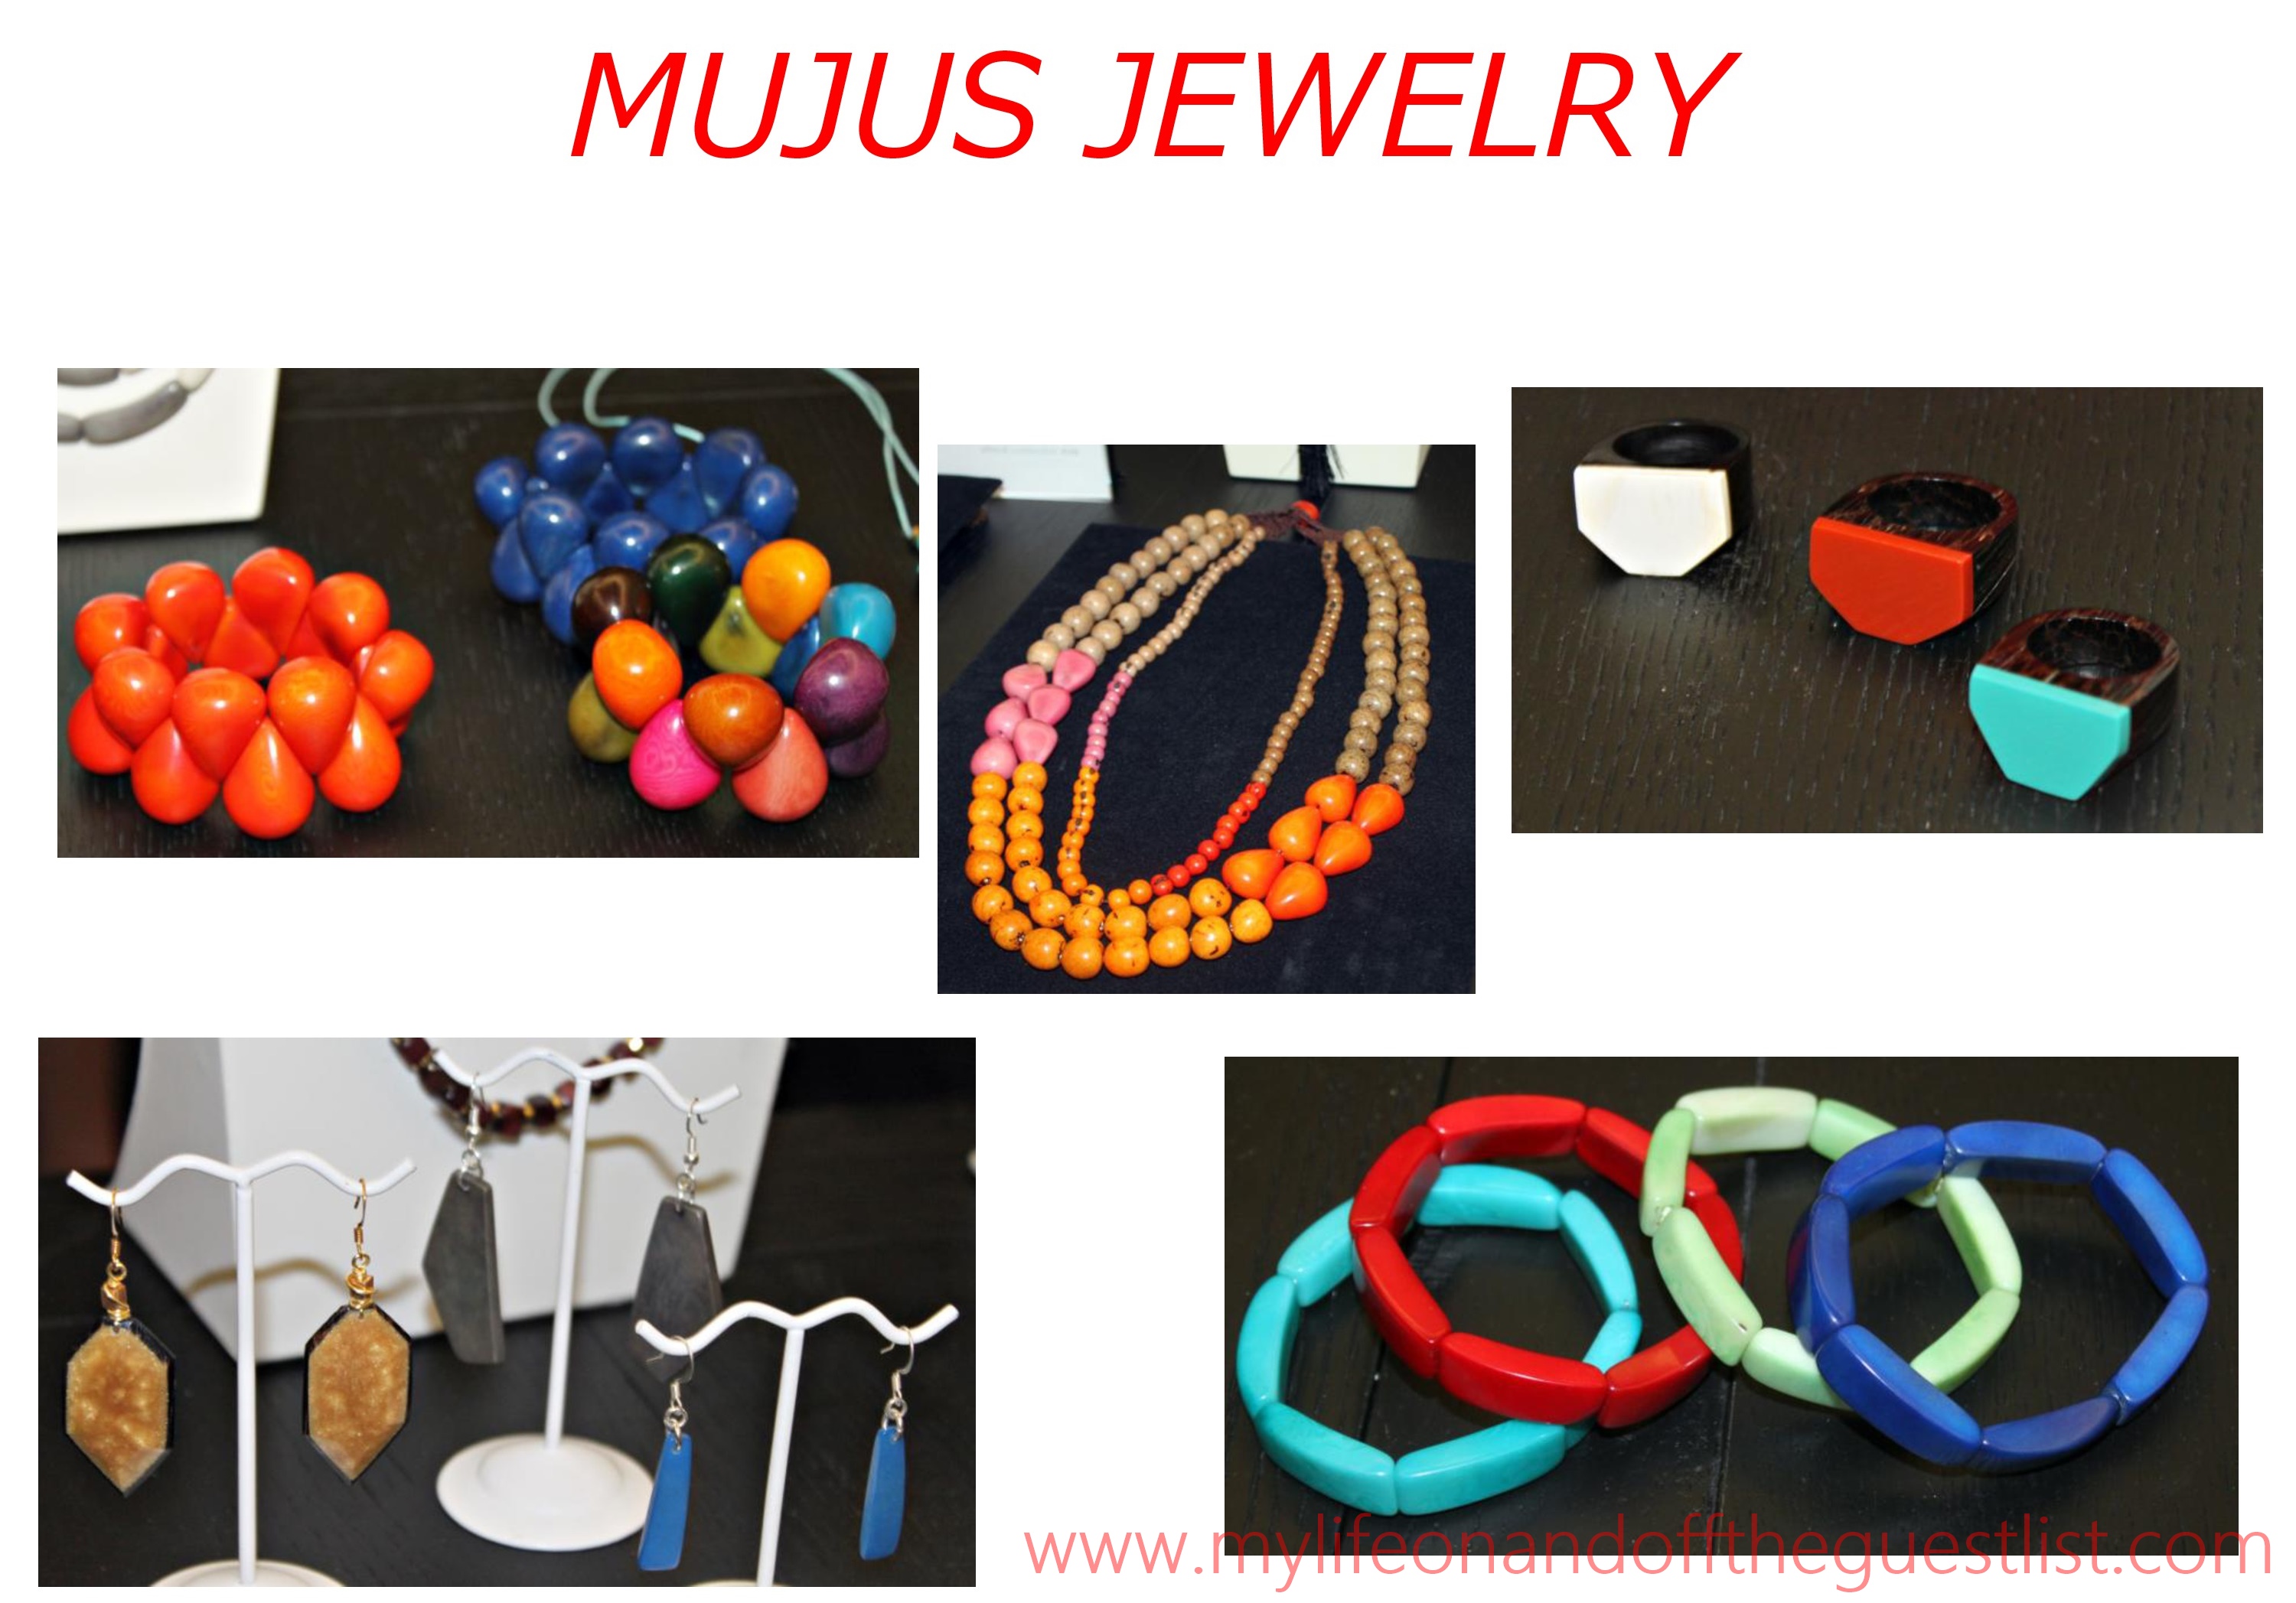 MUJUS_Jewelry_www.mylifeonandofftheguestlist.com.jpg